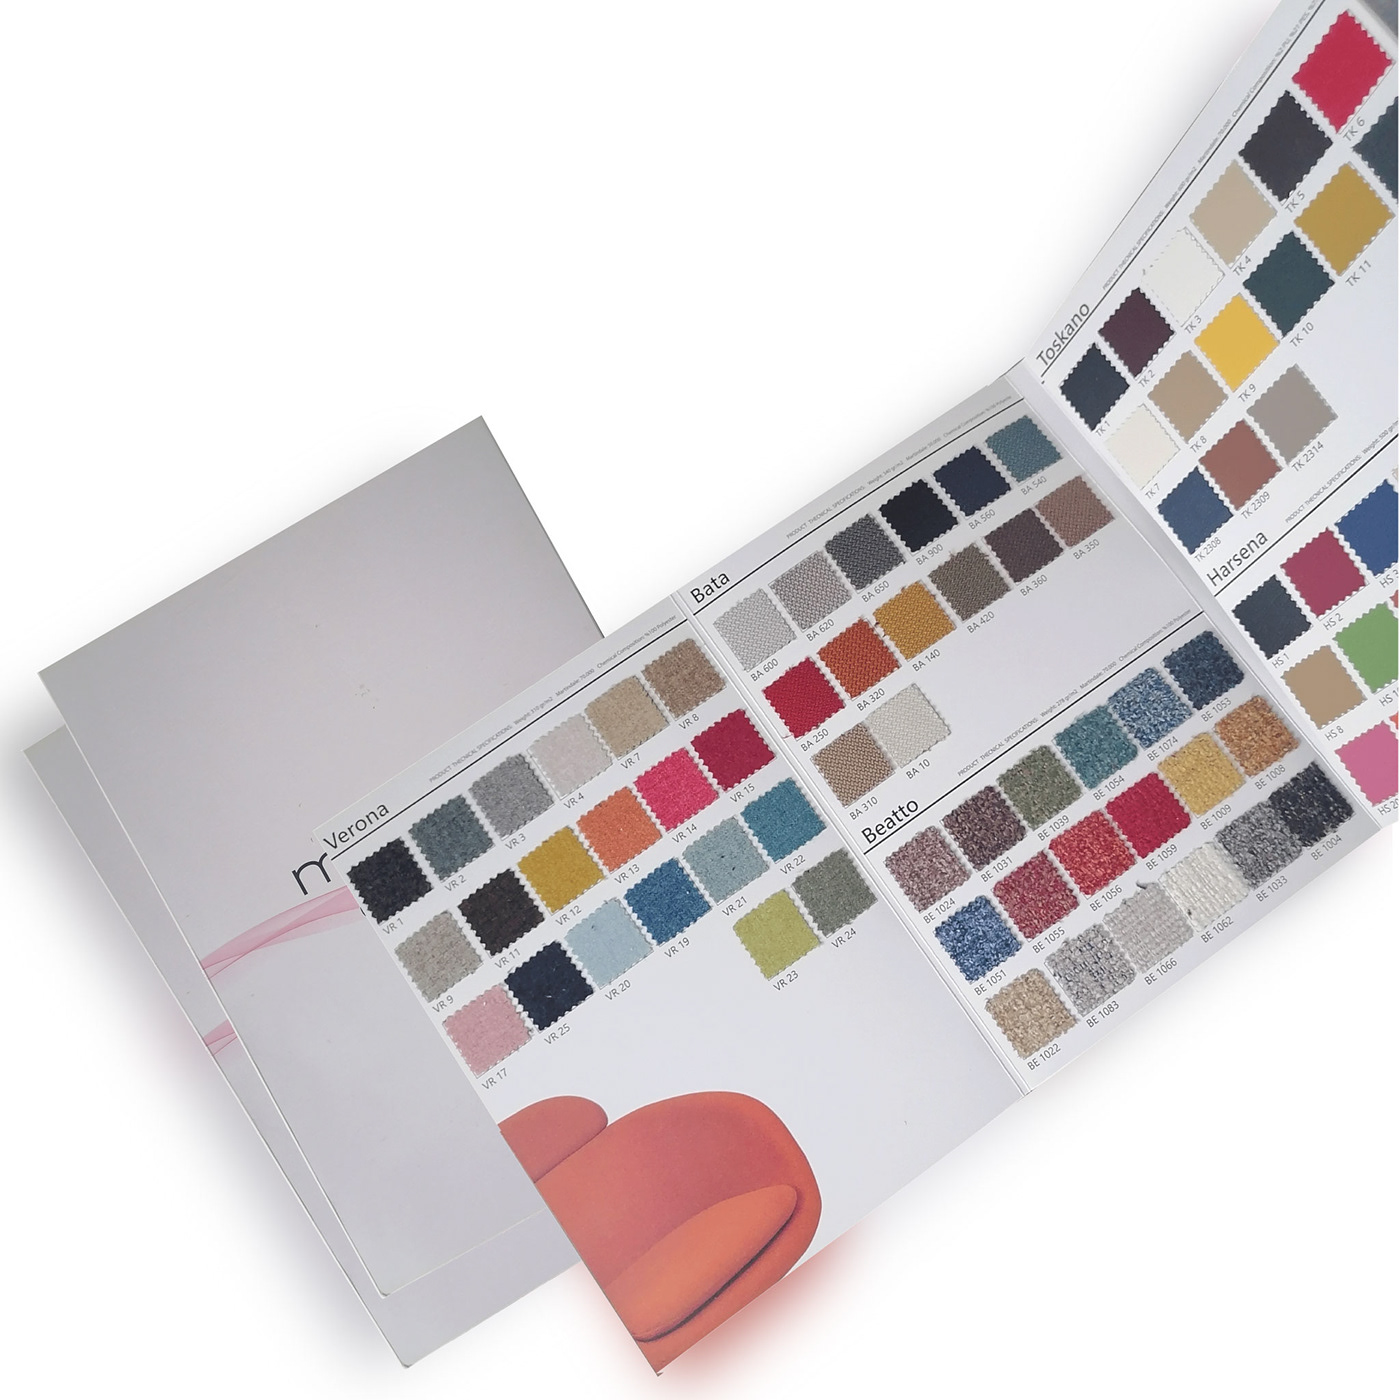 design color colorbook furniture furnituredesign productdesign ILLUSTRATION  Graphic Designer visual identity